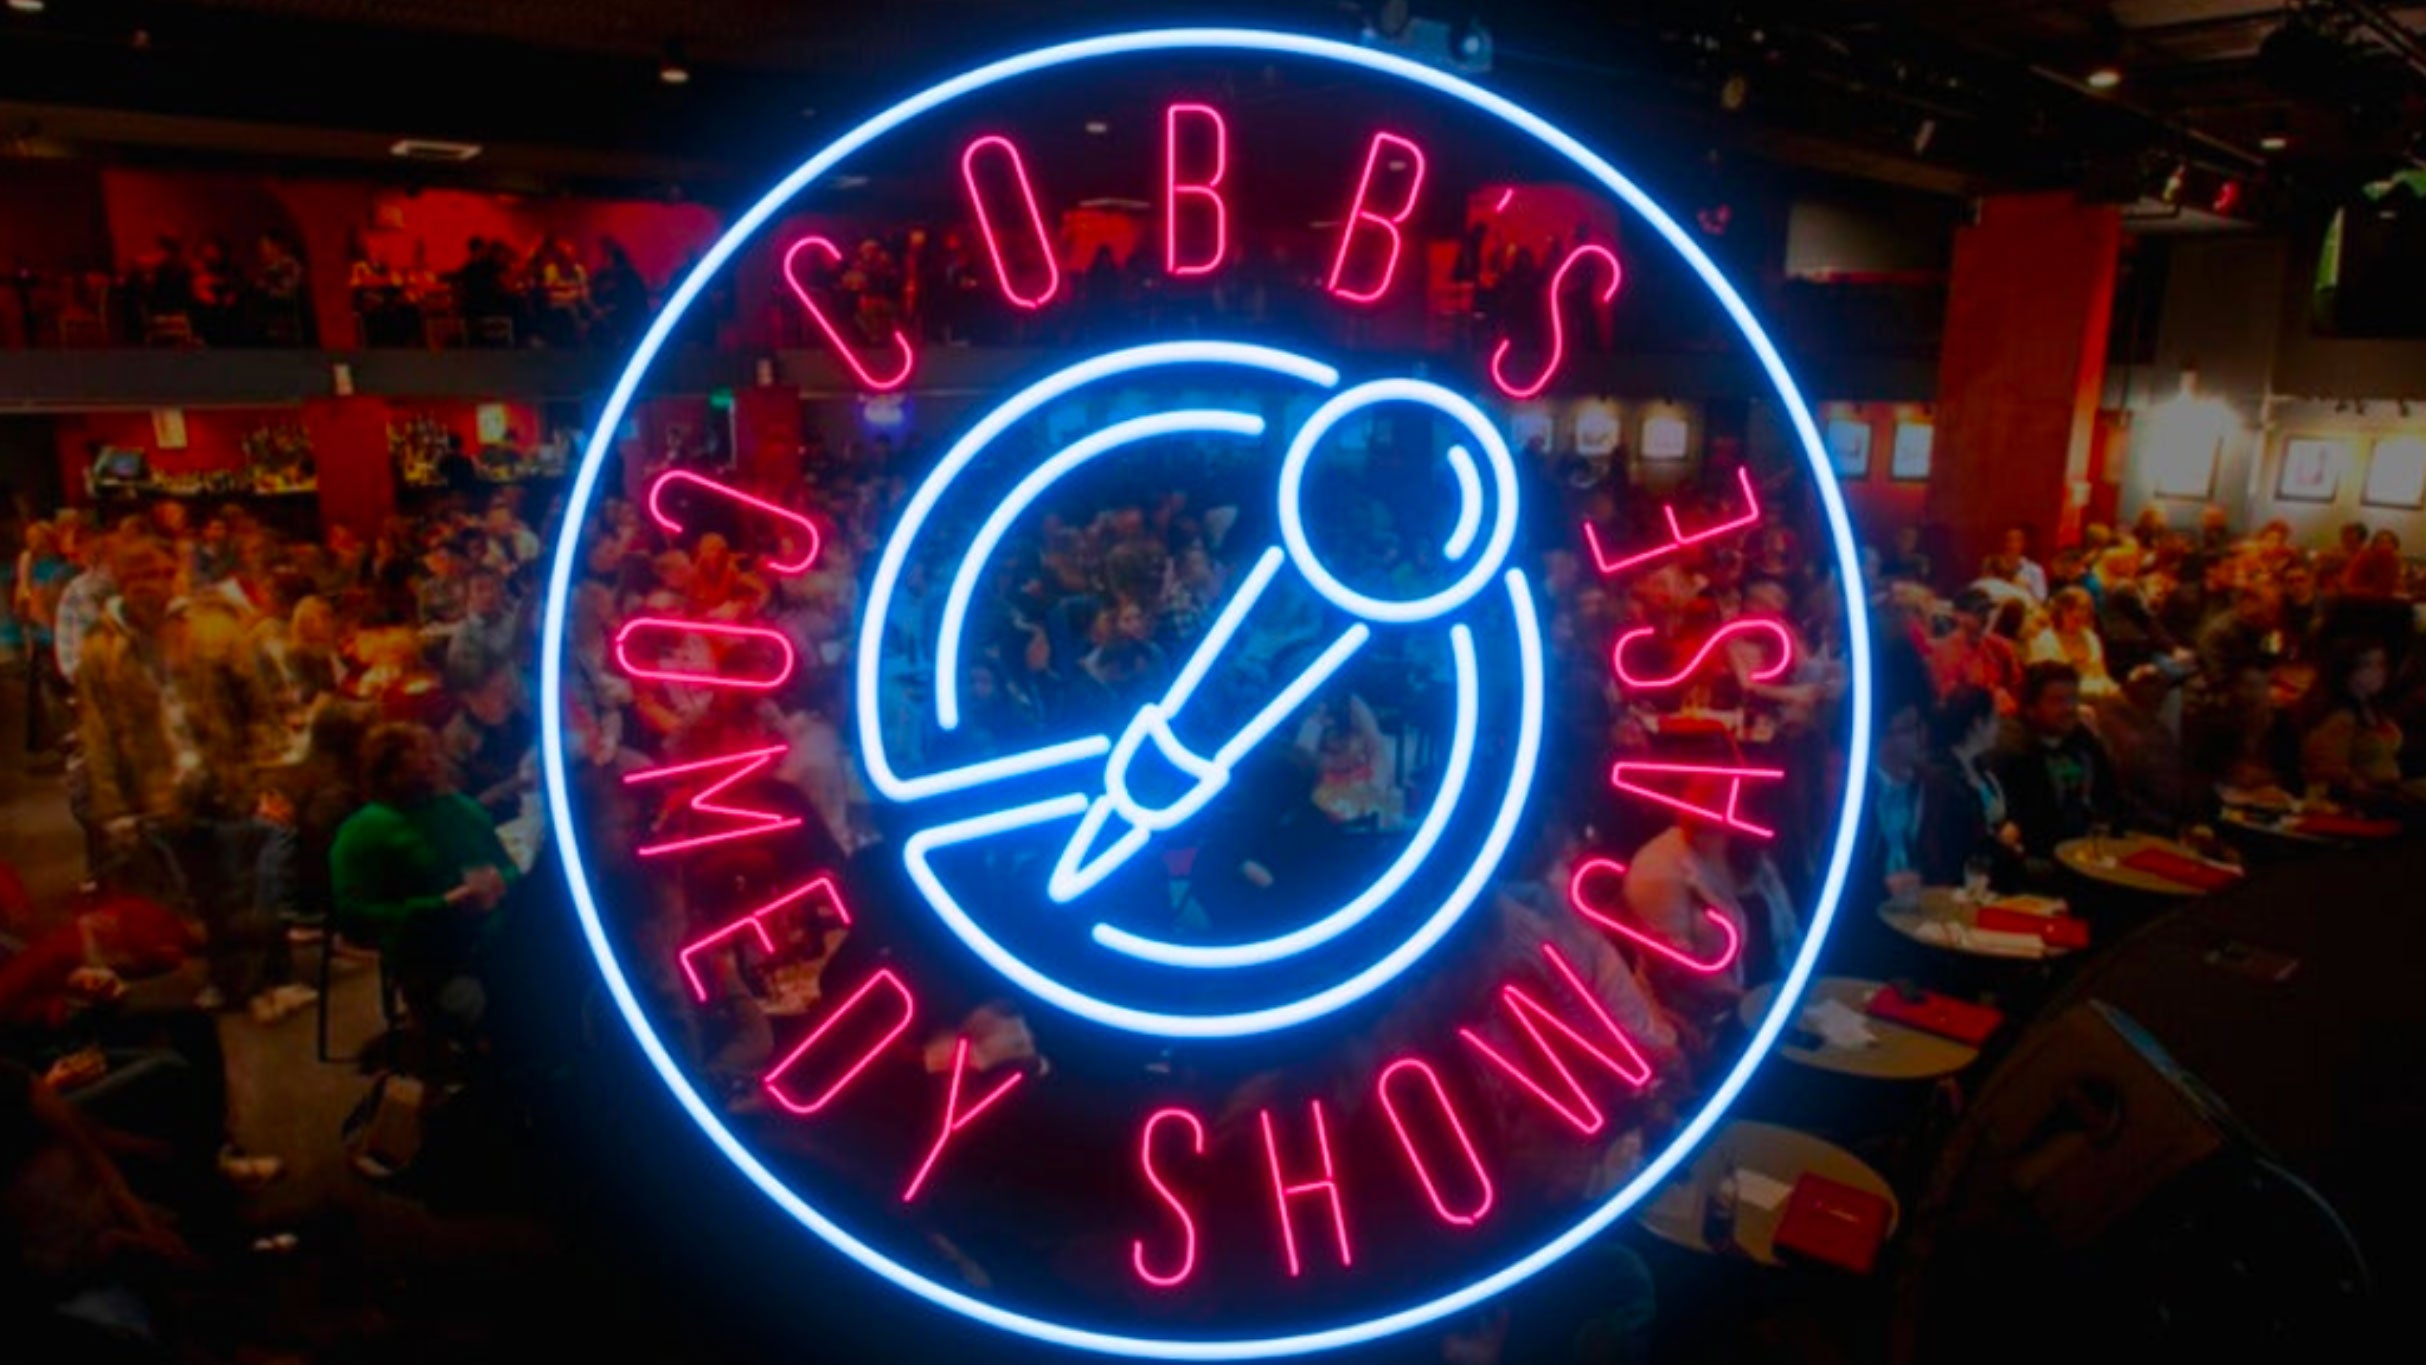 Cobb's Comedy Showcase at Cobb's Comedy Club